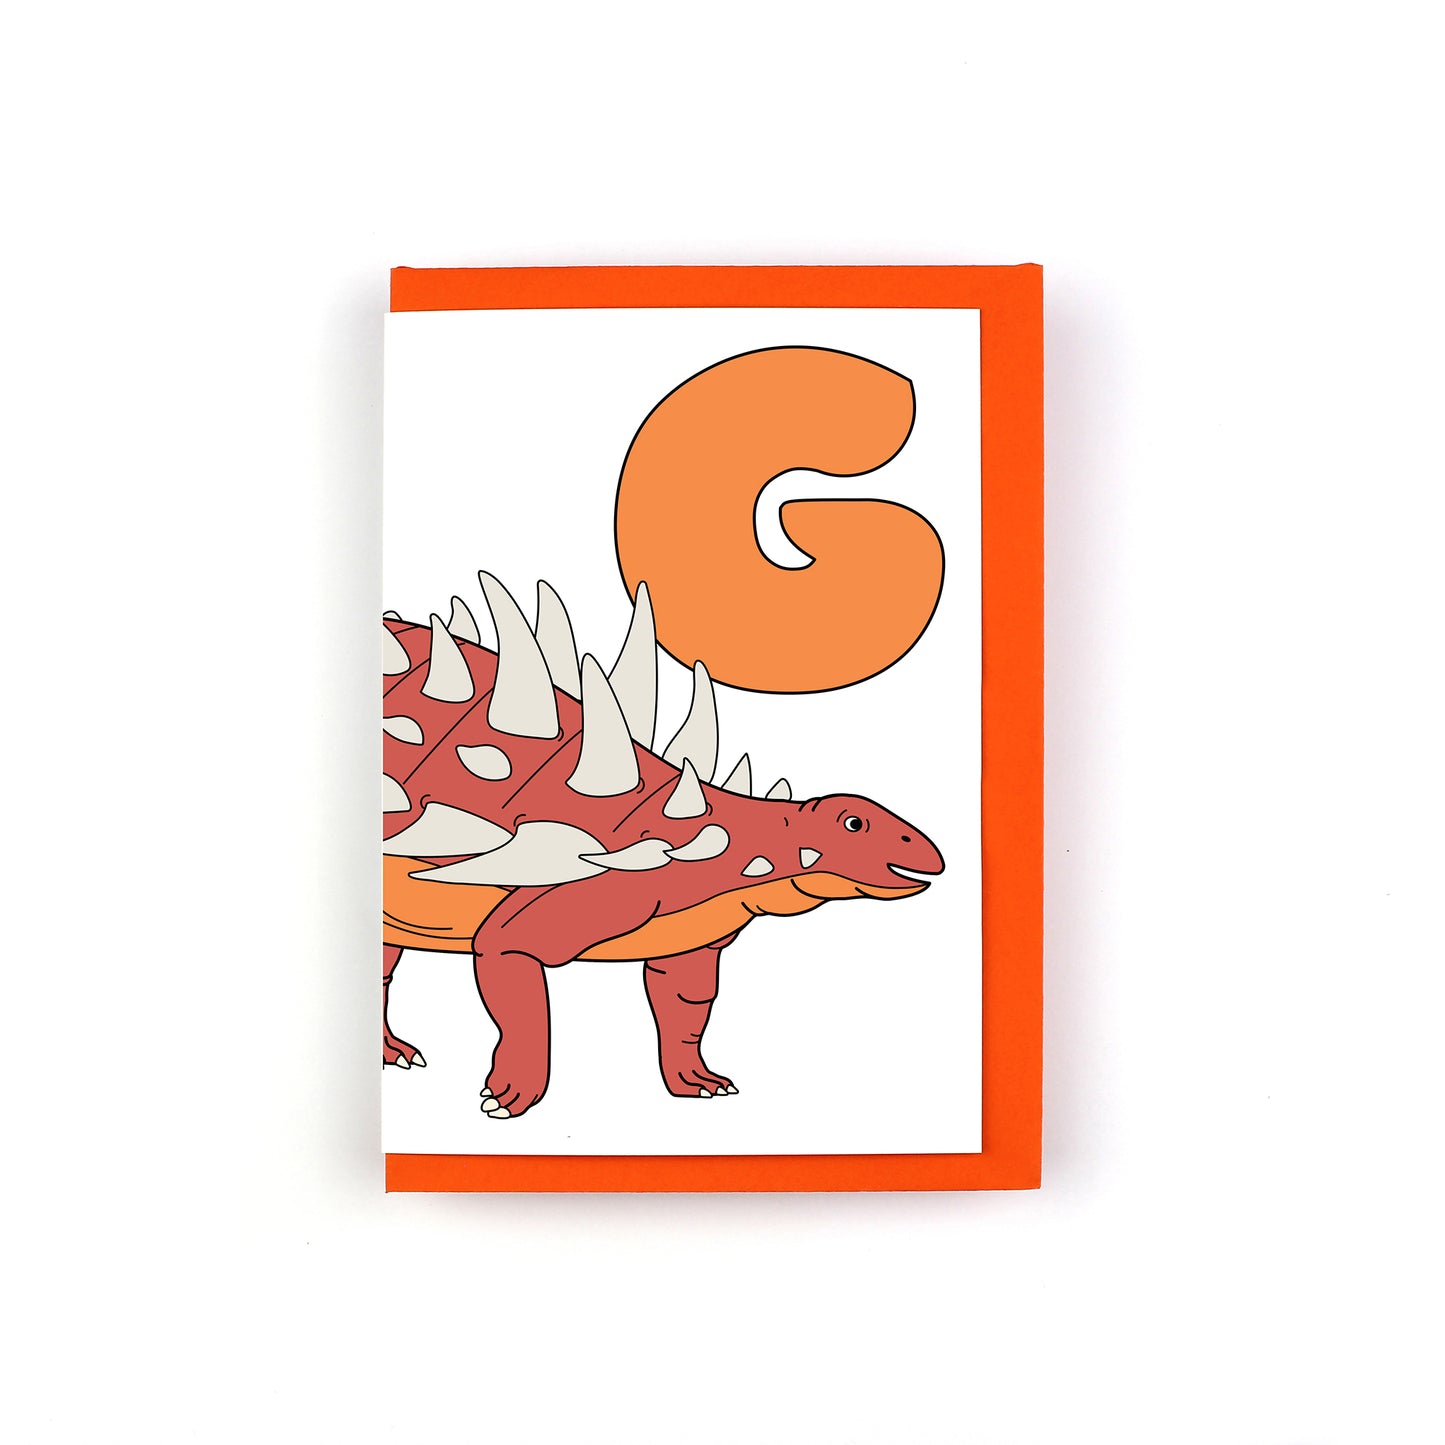 Dinosaur Alphabet G Greeting Card